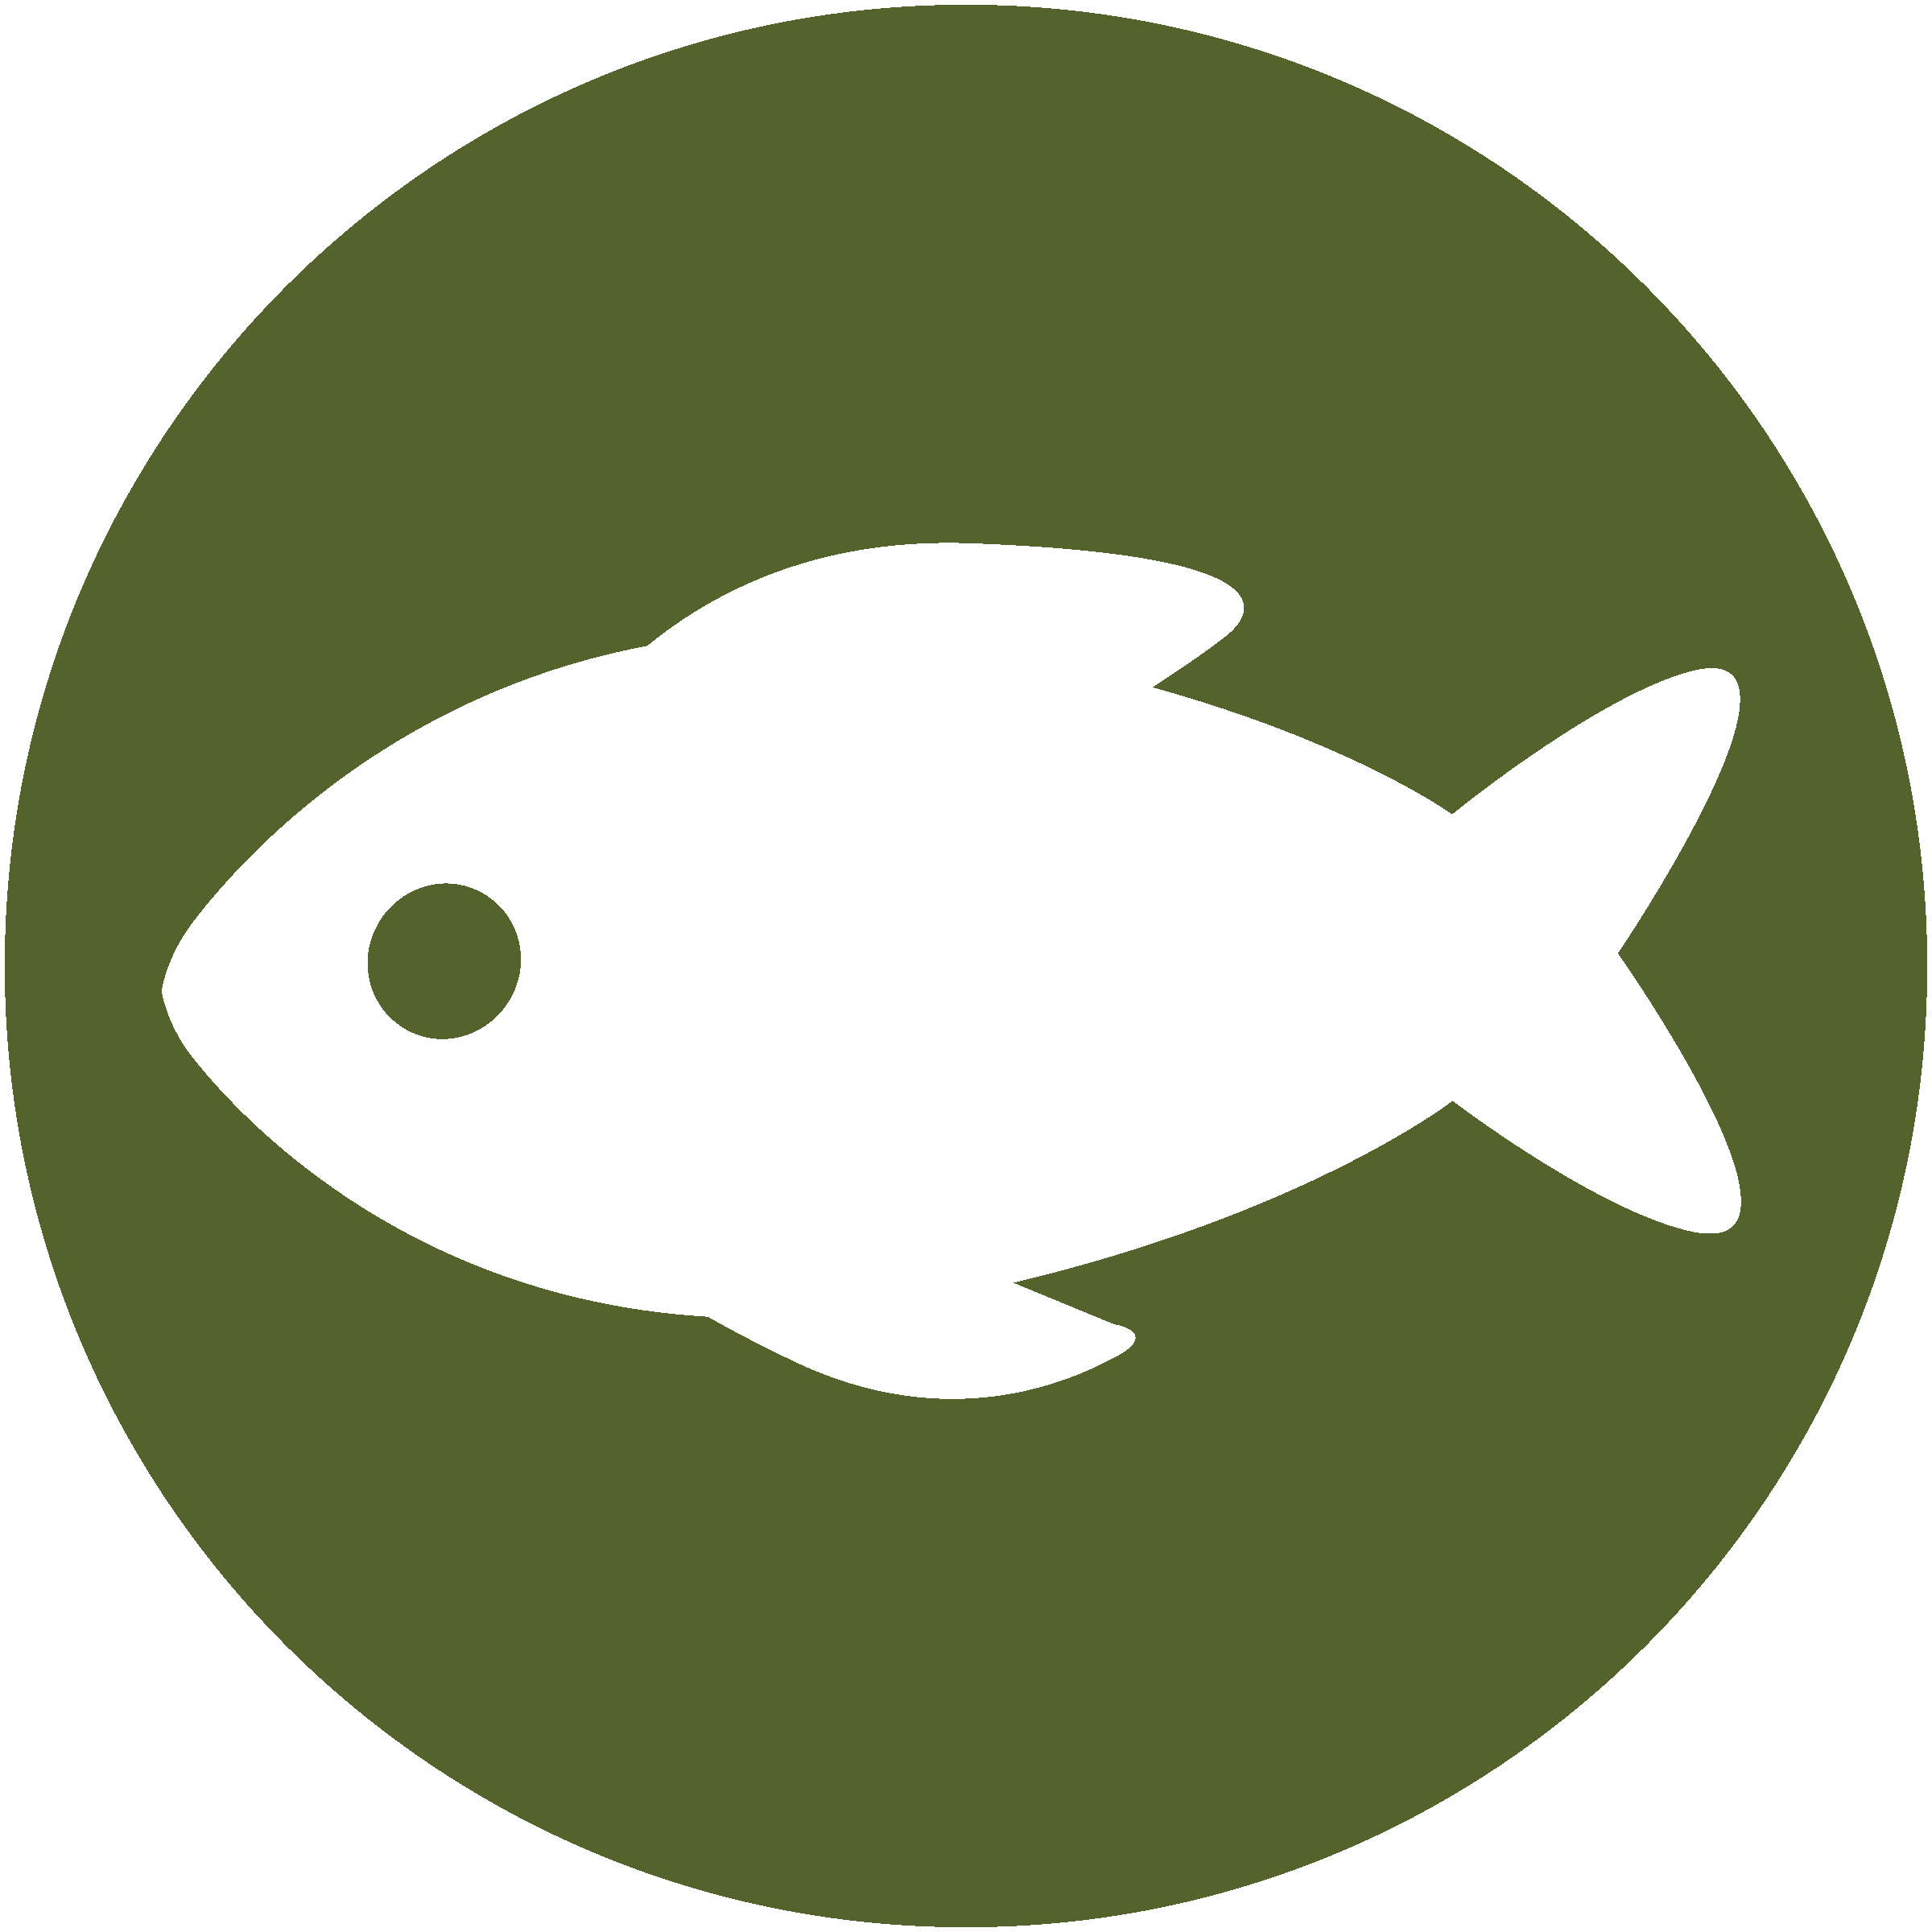 icon of fish